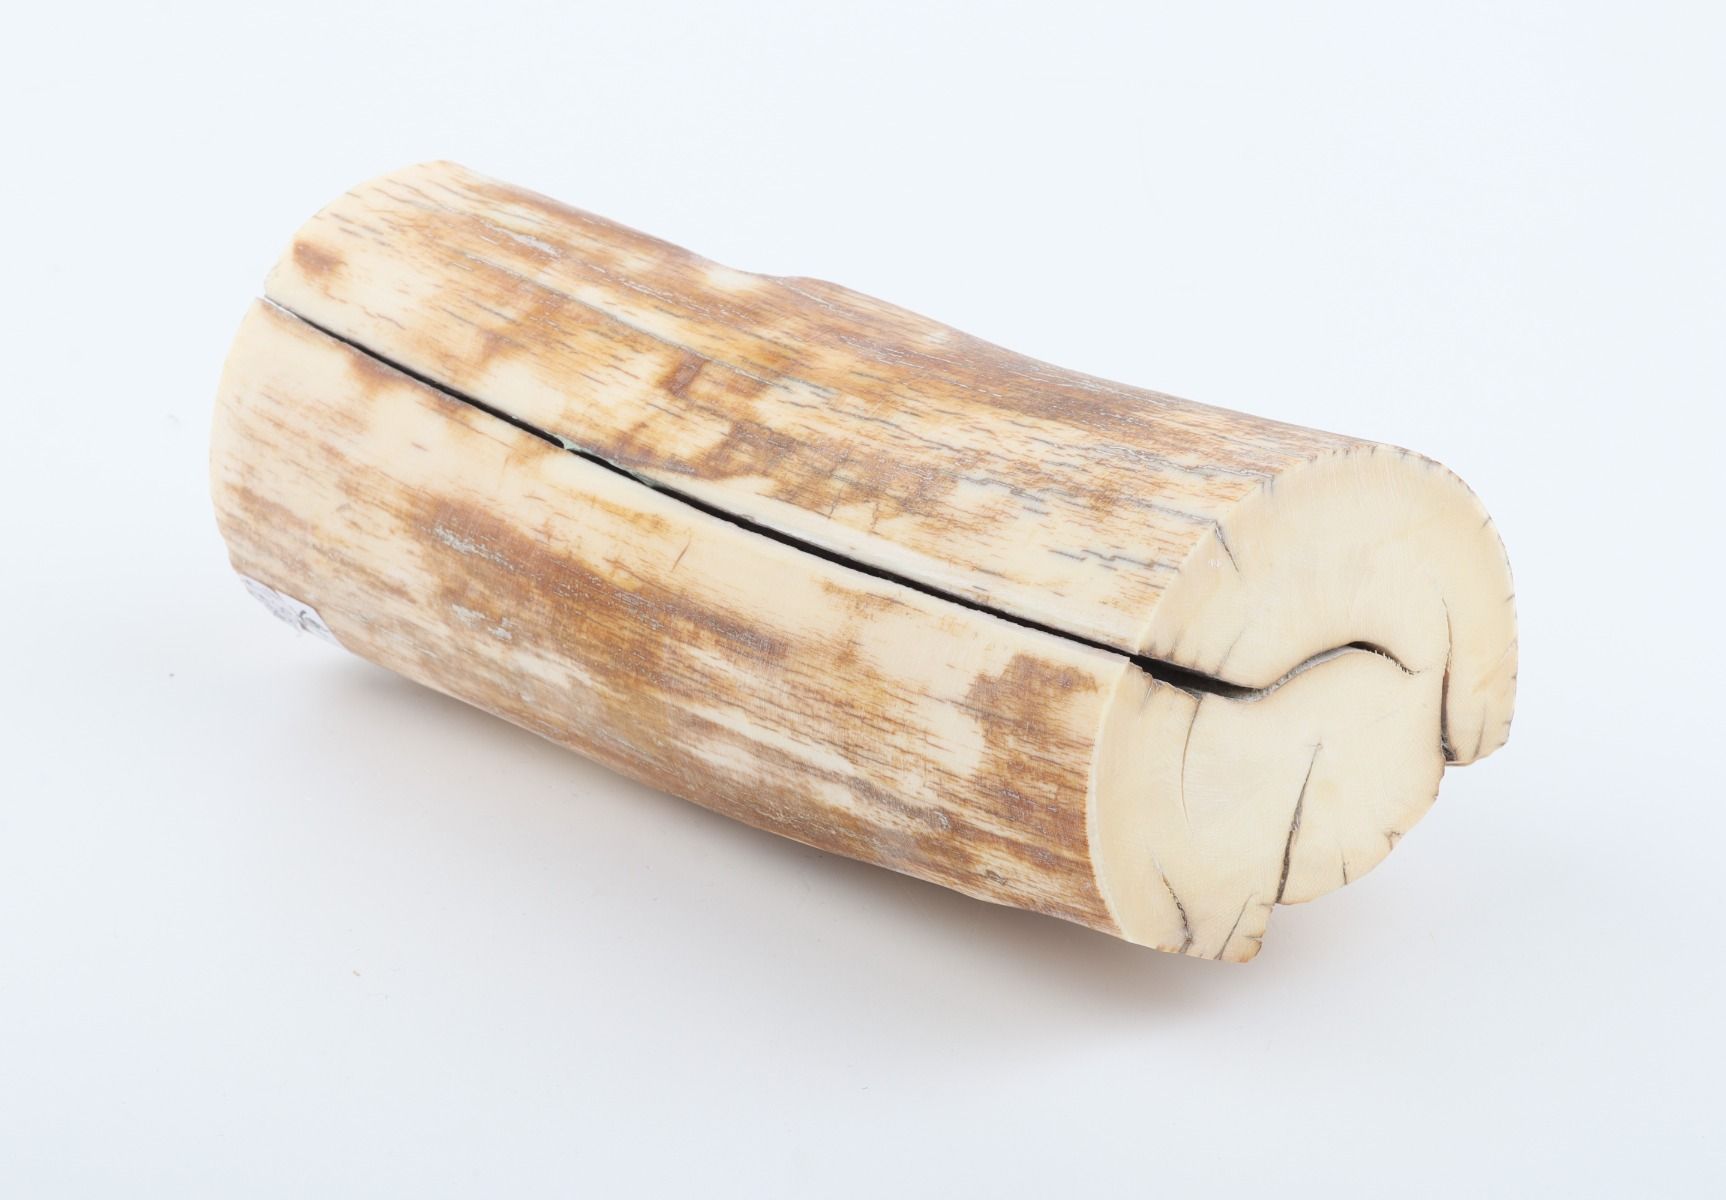 Natural round mammoth ivory piece